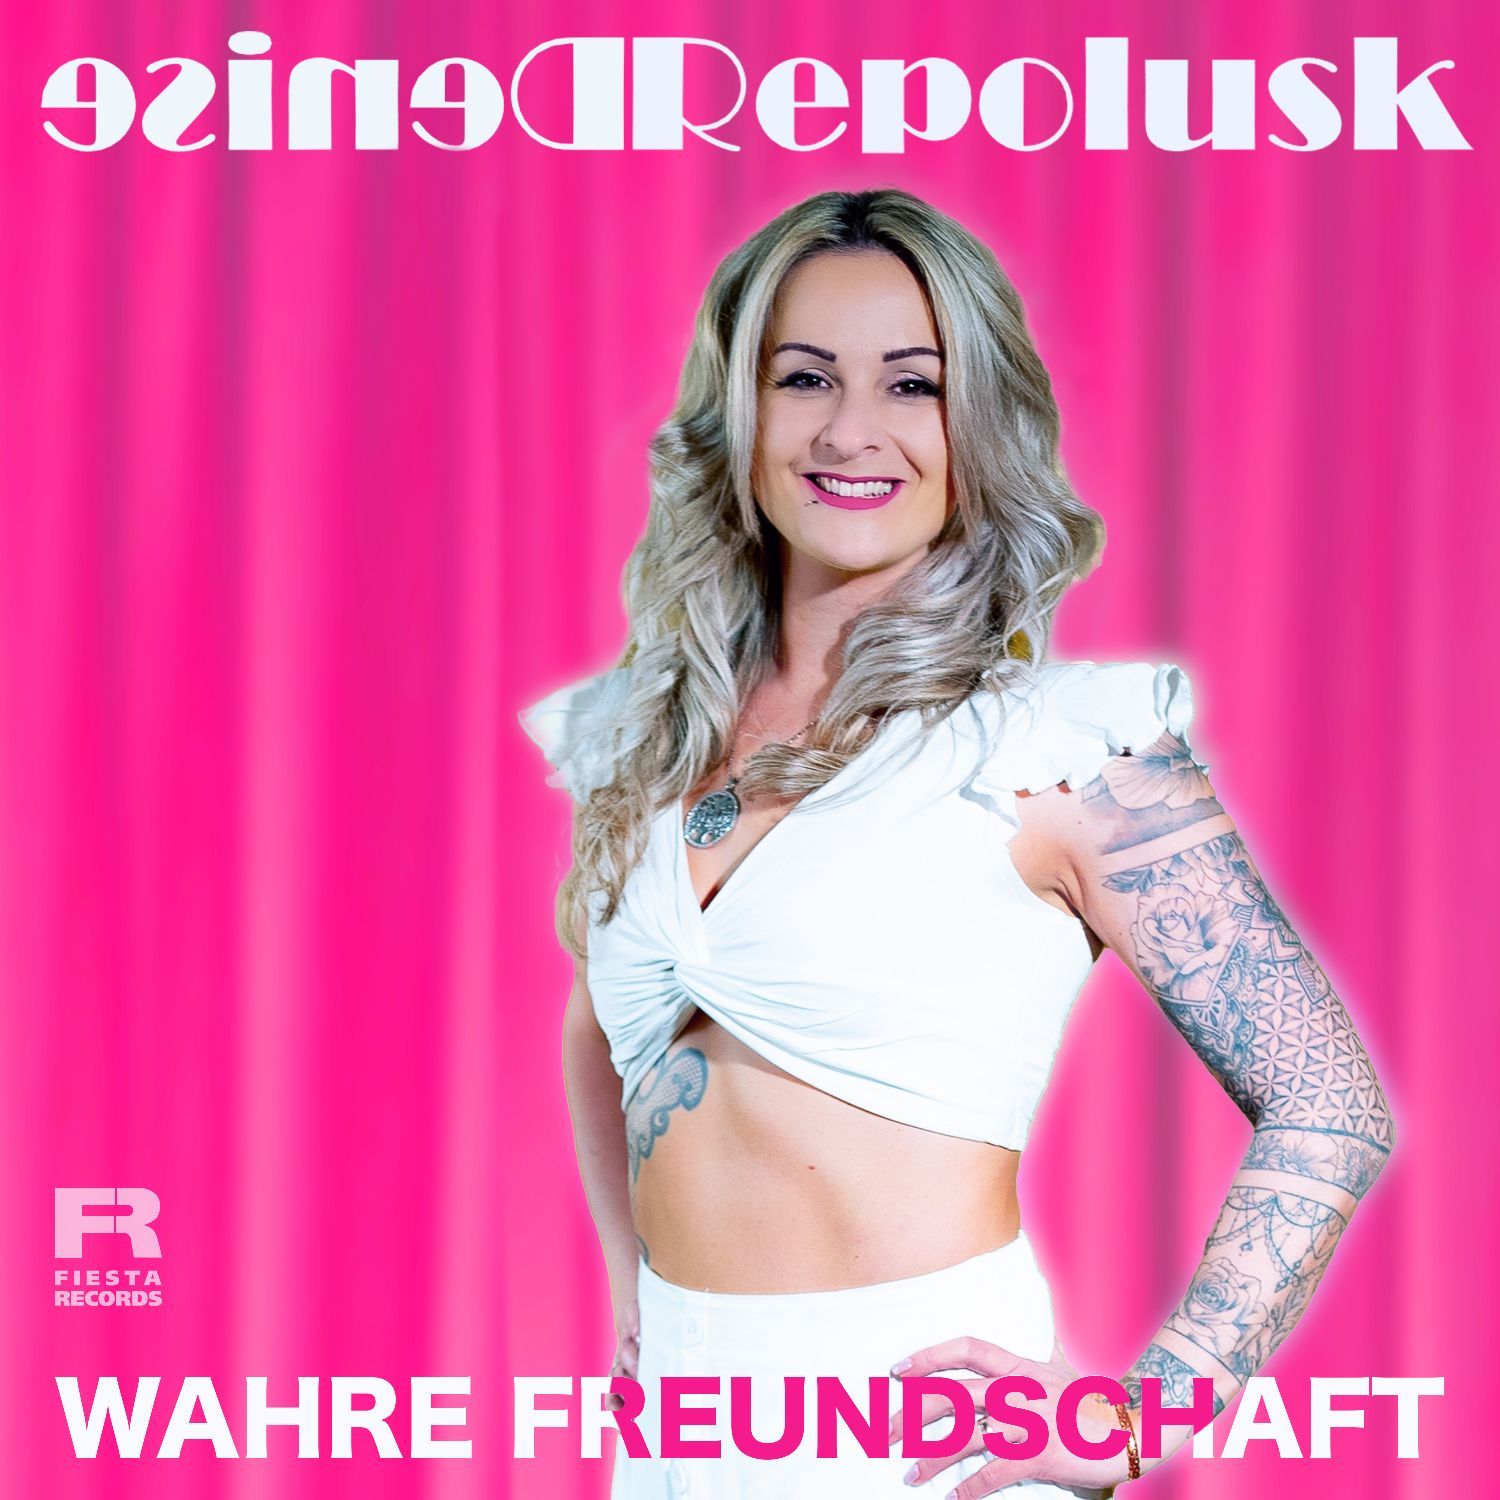 Denise Repolusk - Wahre Freundschaft